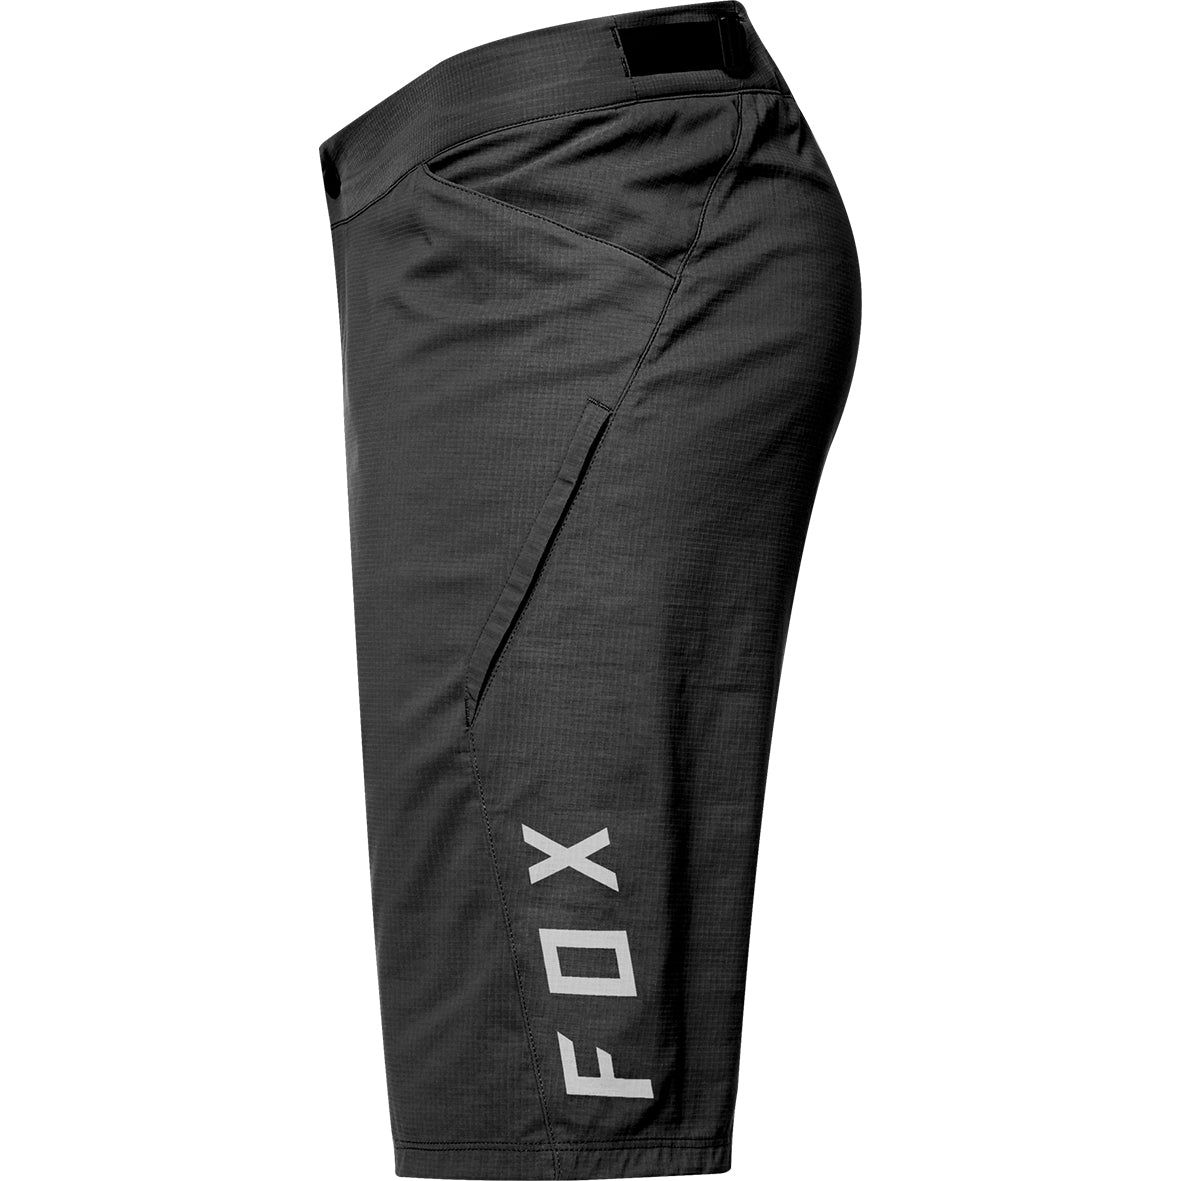 Fox Ranger MTB Shorts (Black)